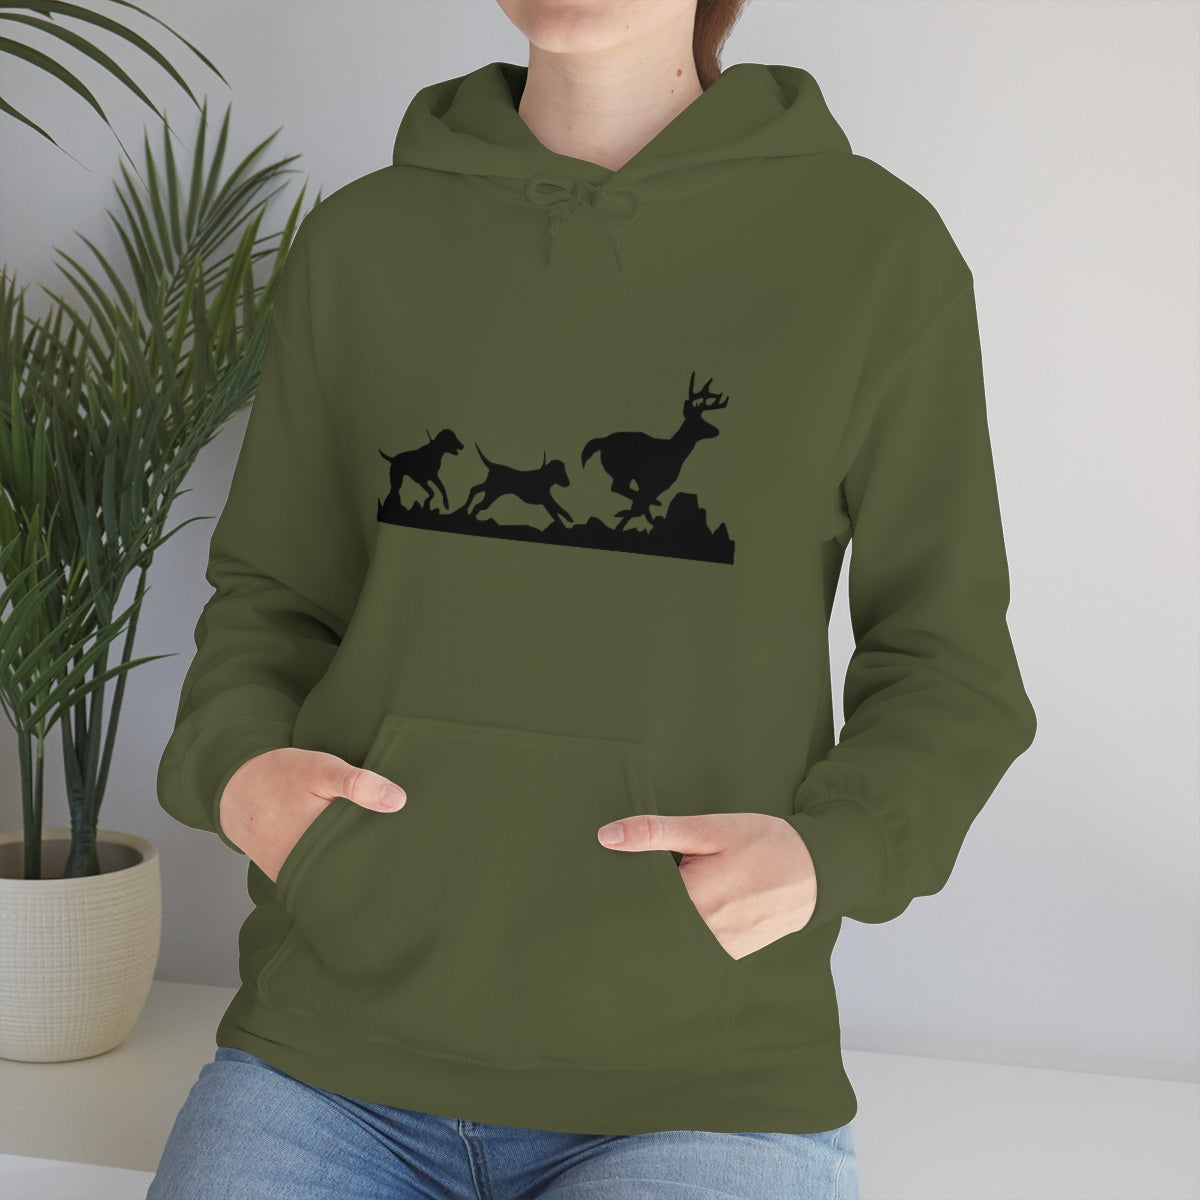 Hounds Chasing Deer Unisex Hooded Sweatshirt